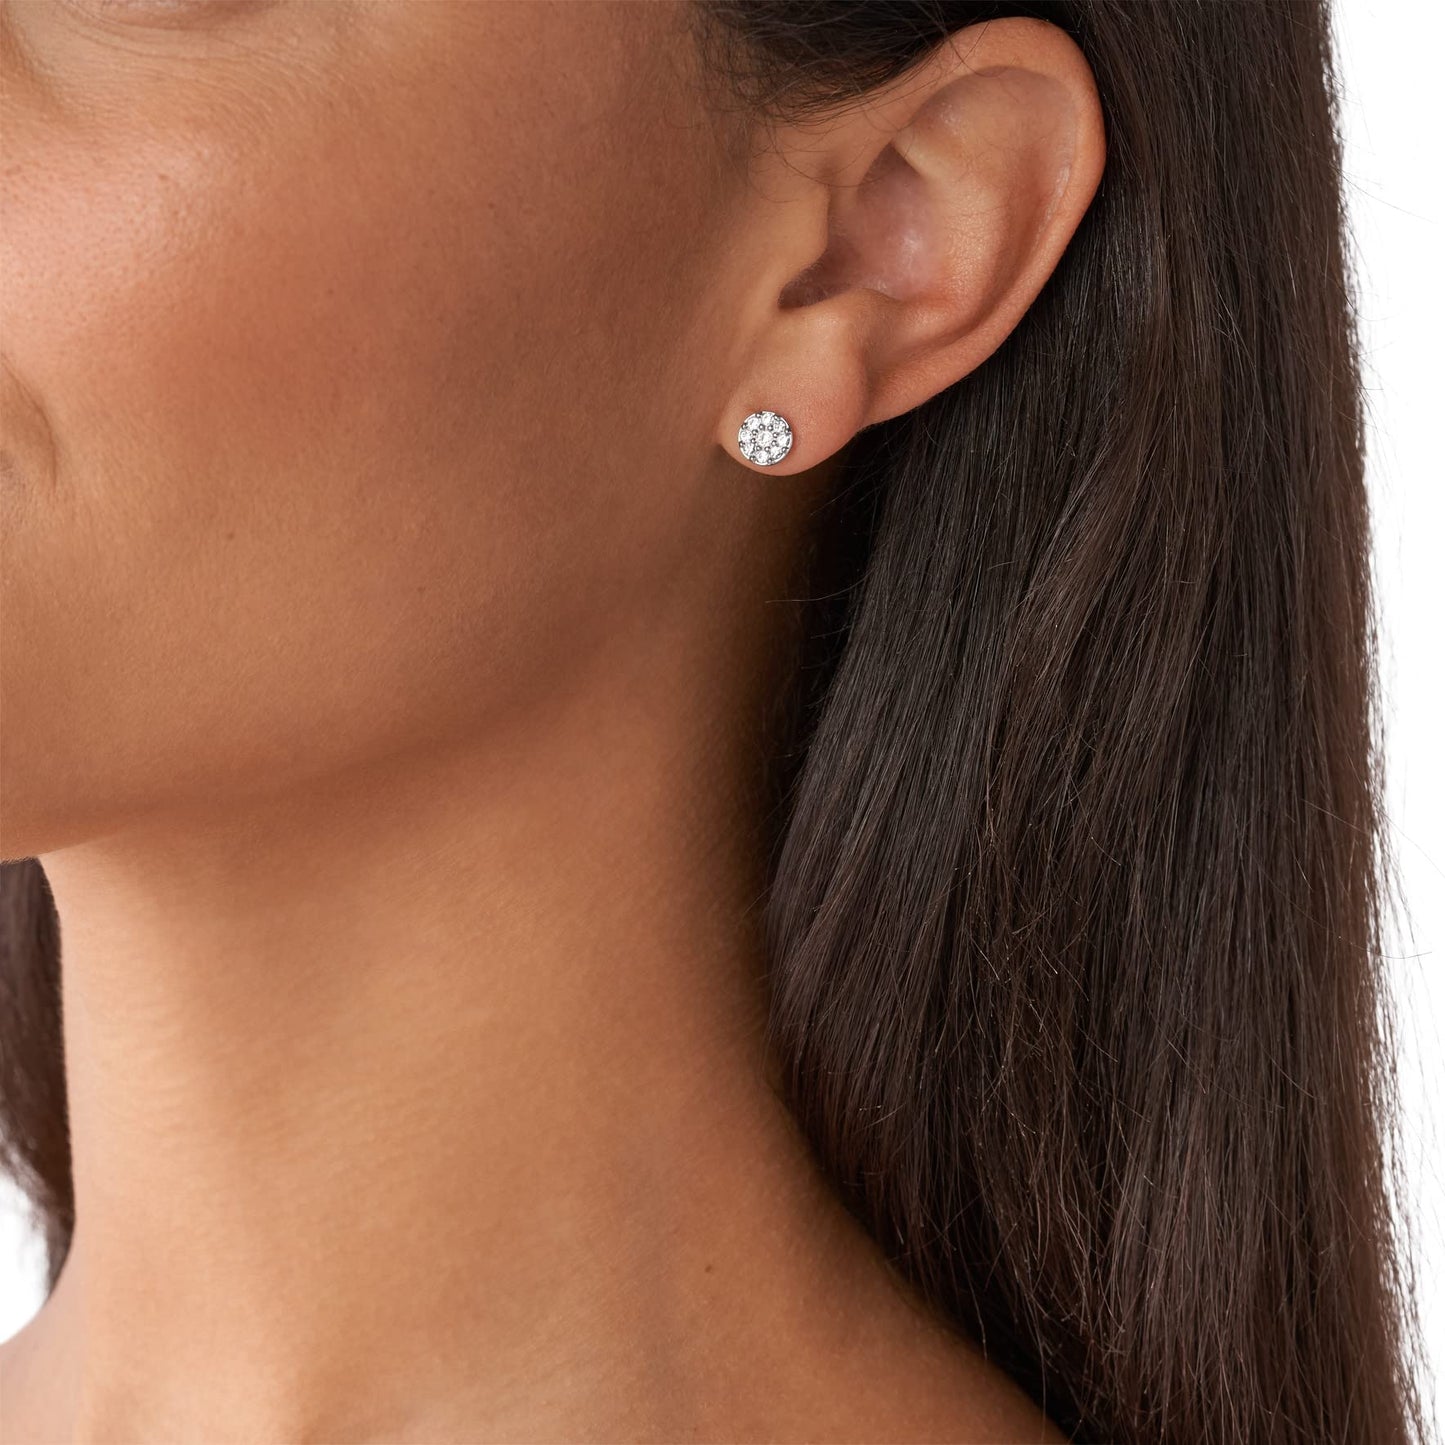 Fossil earrings for Women Disc Stainless steel studs earrings